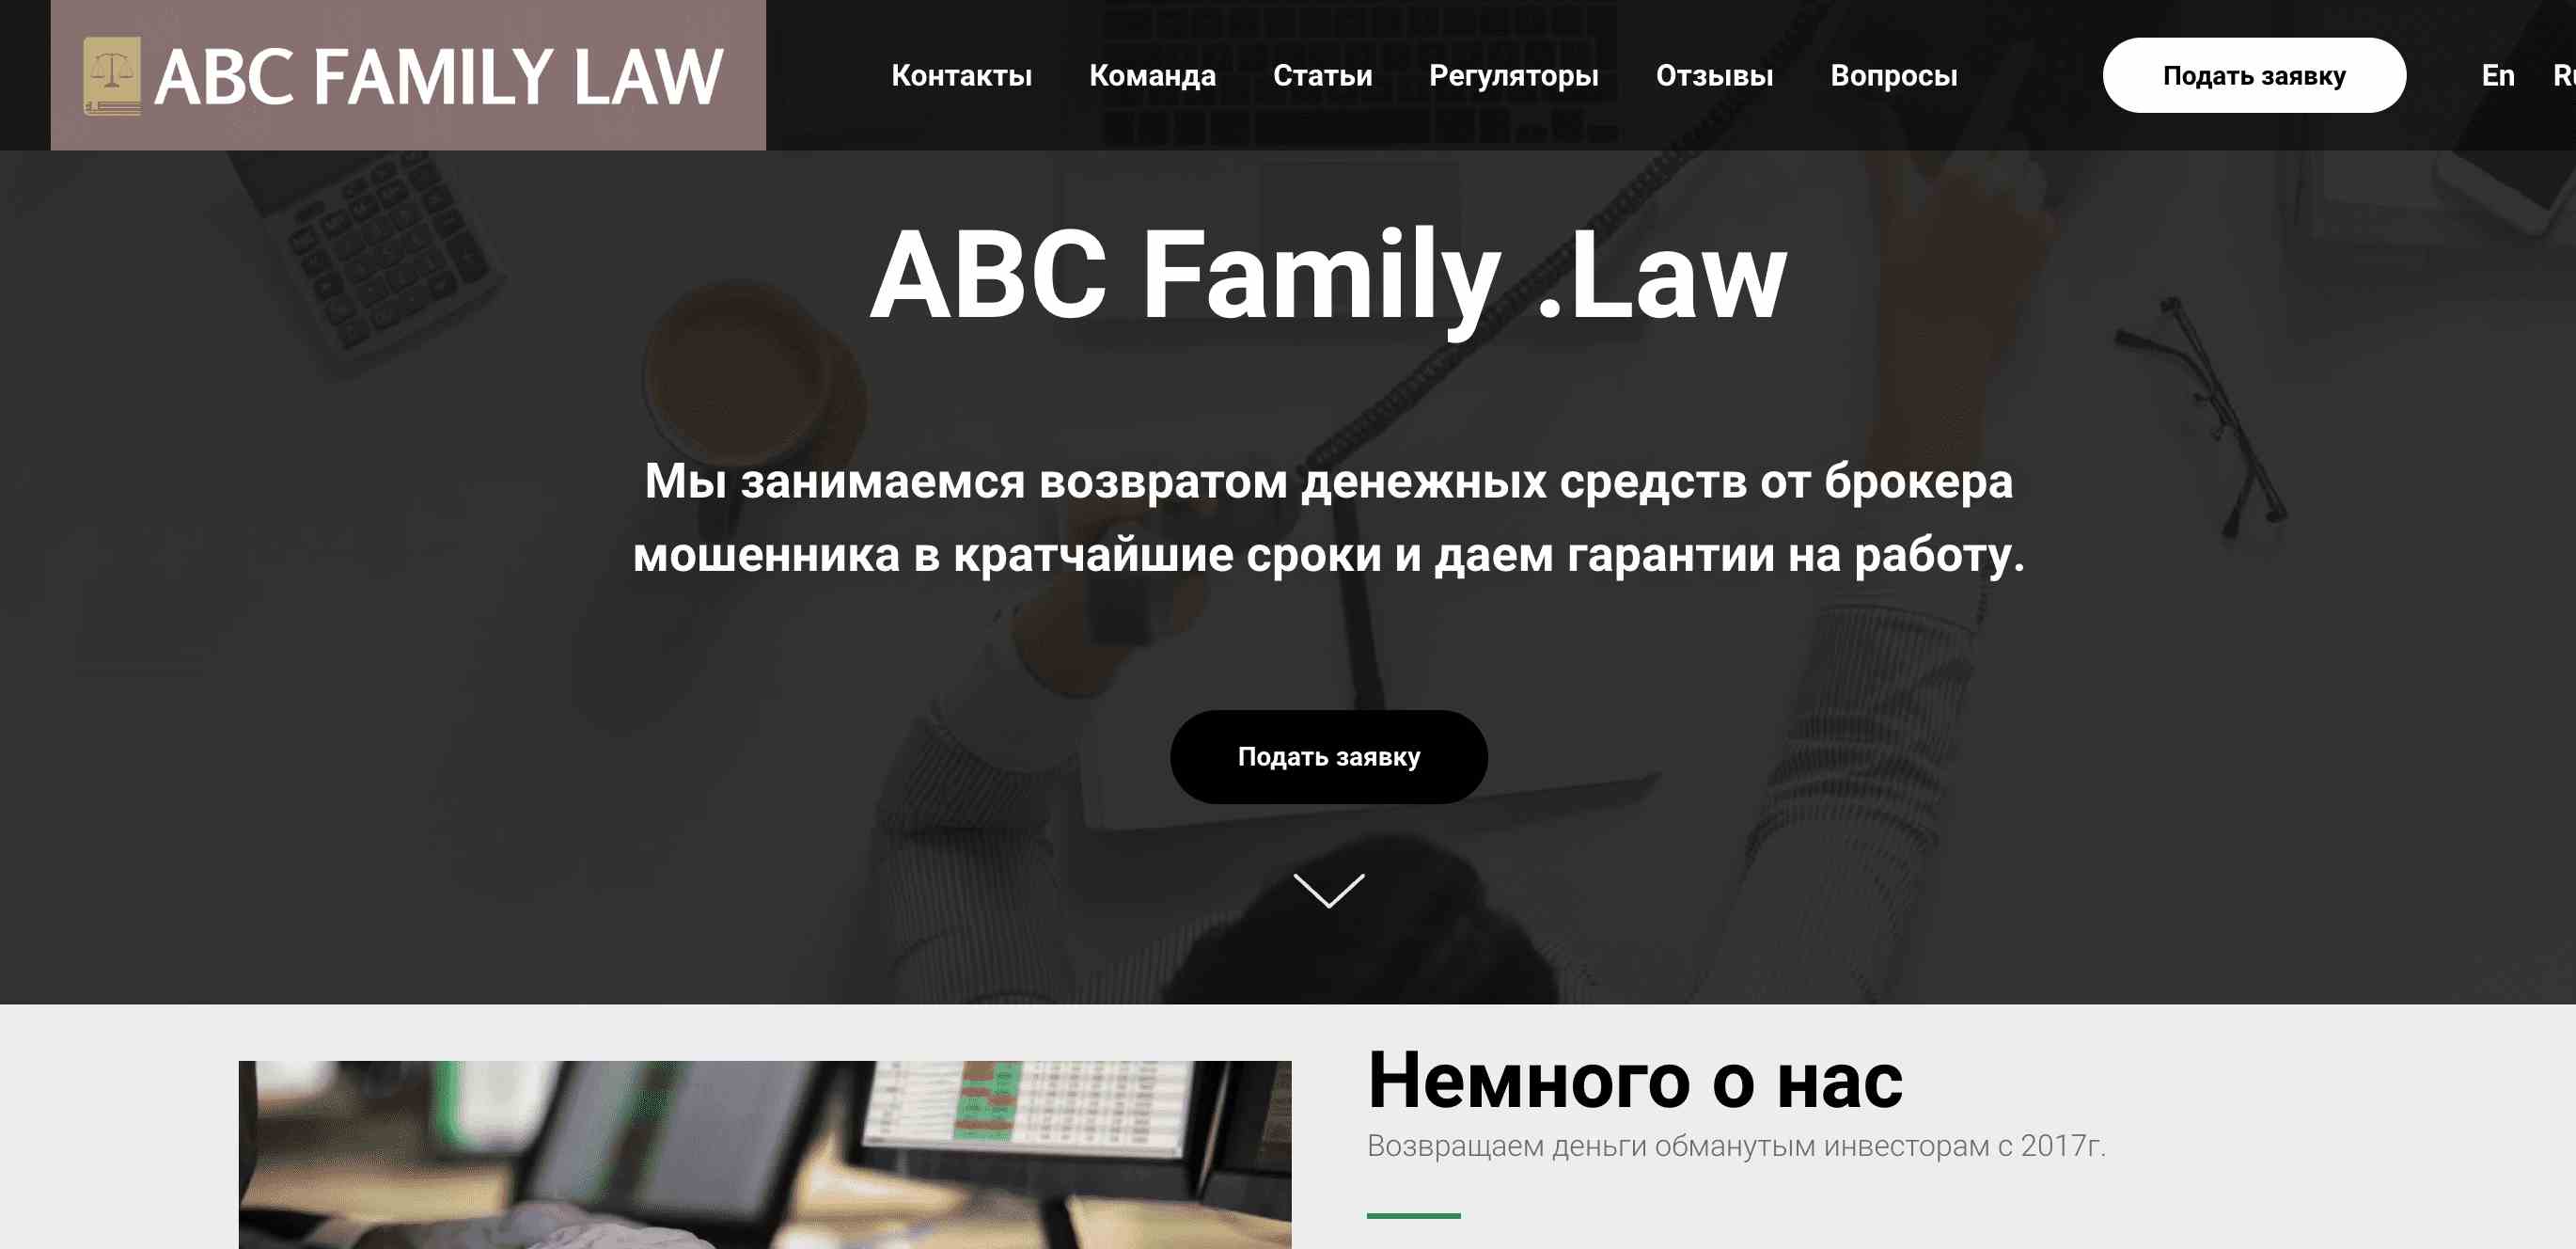 Abc Family Law